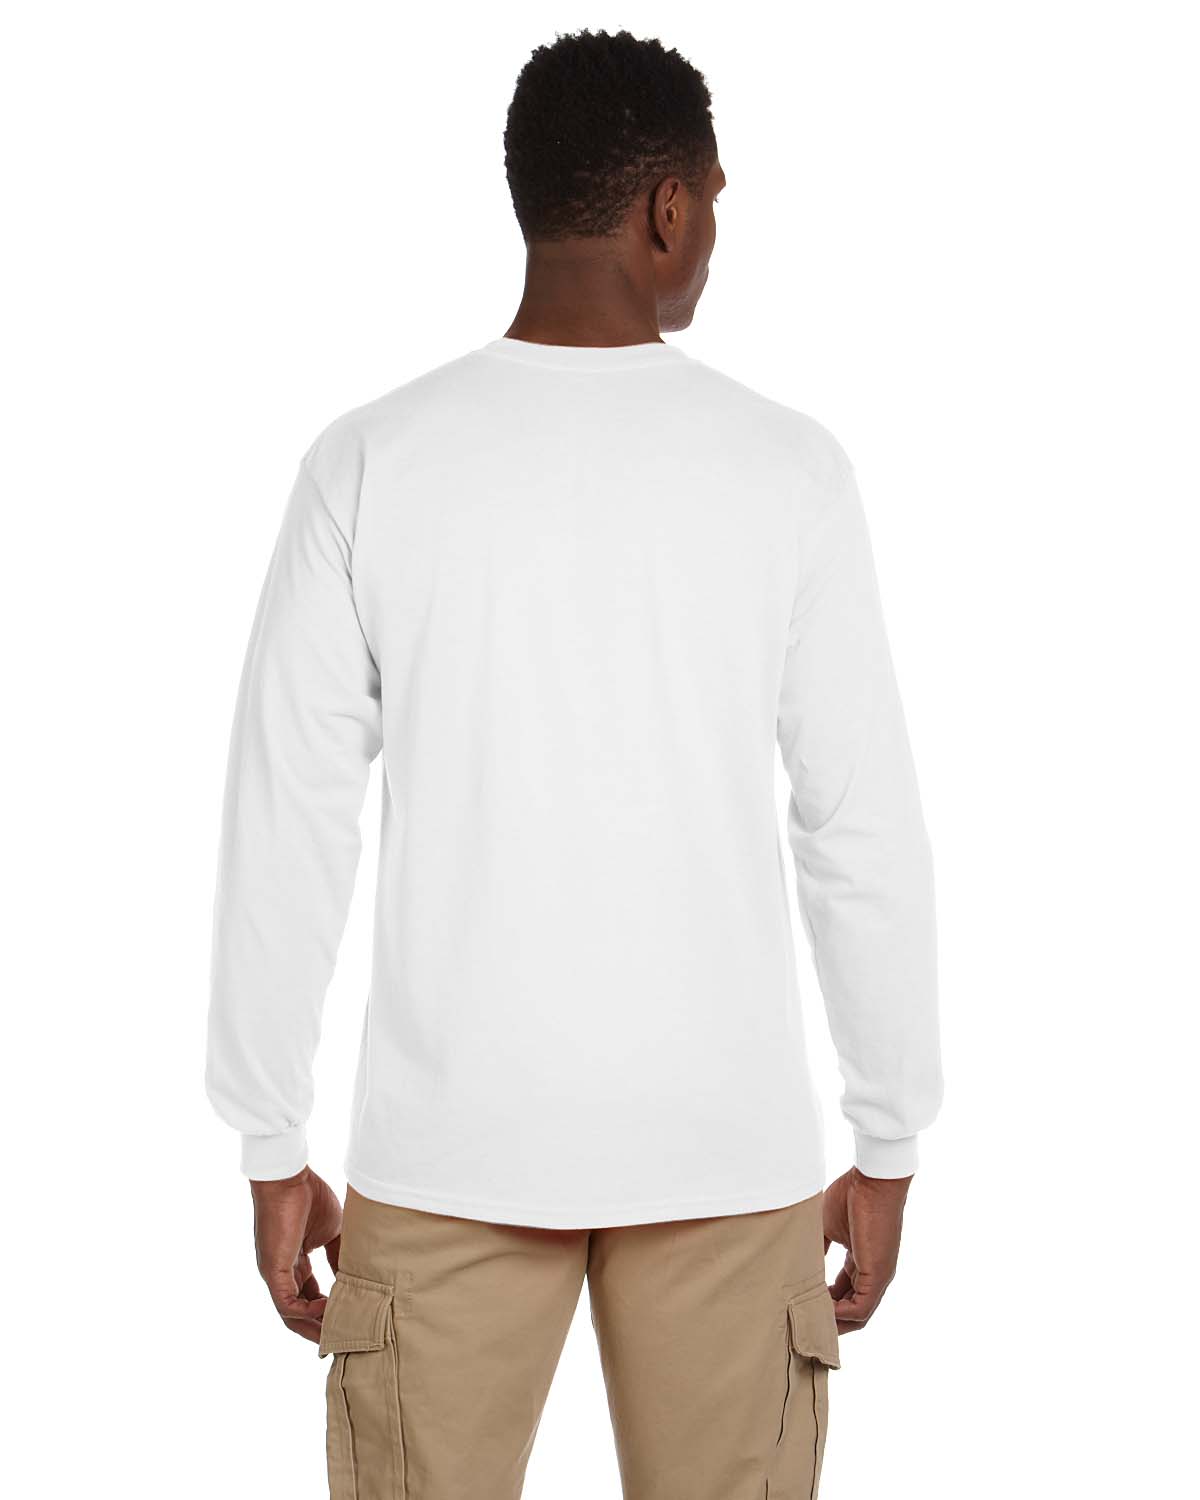 100 Gildan Heavy Cotton White Adult Long Sleeve T-Shirts Bulk Blank Lot S M L XL